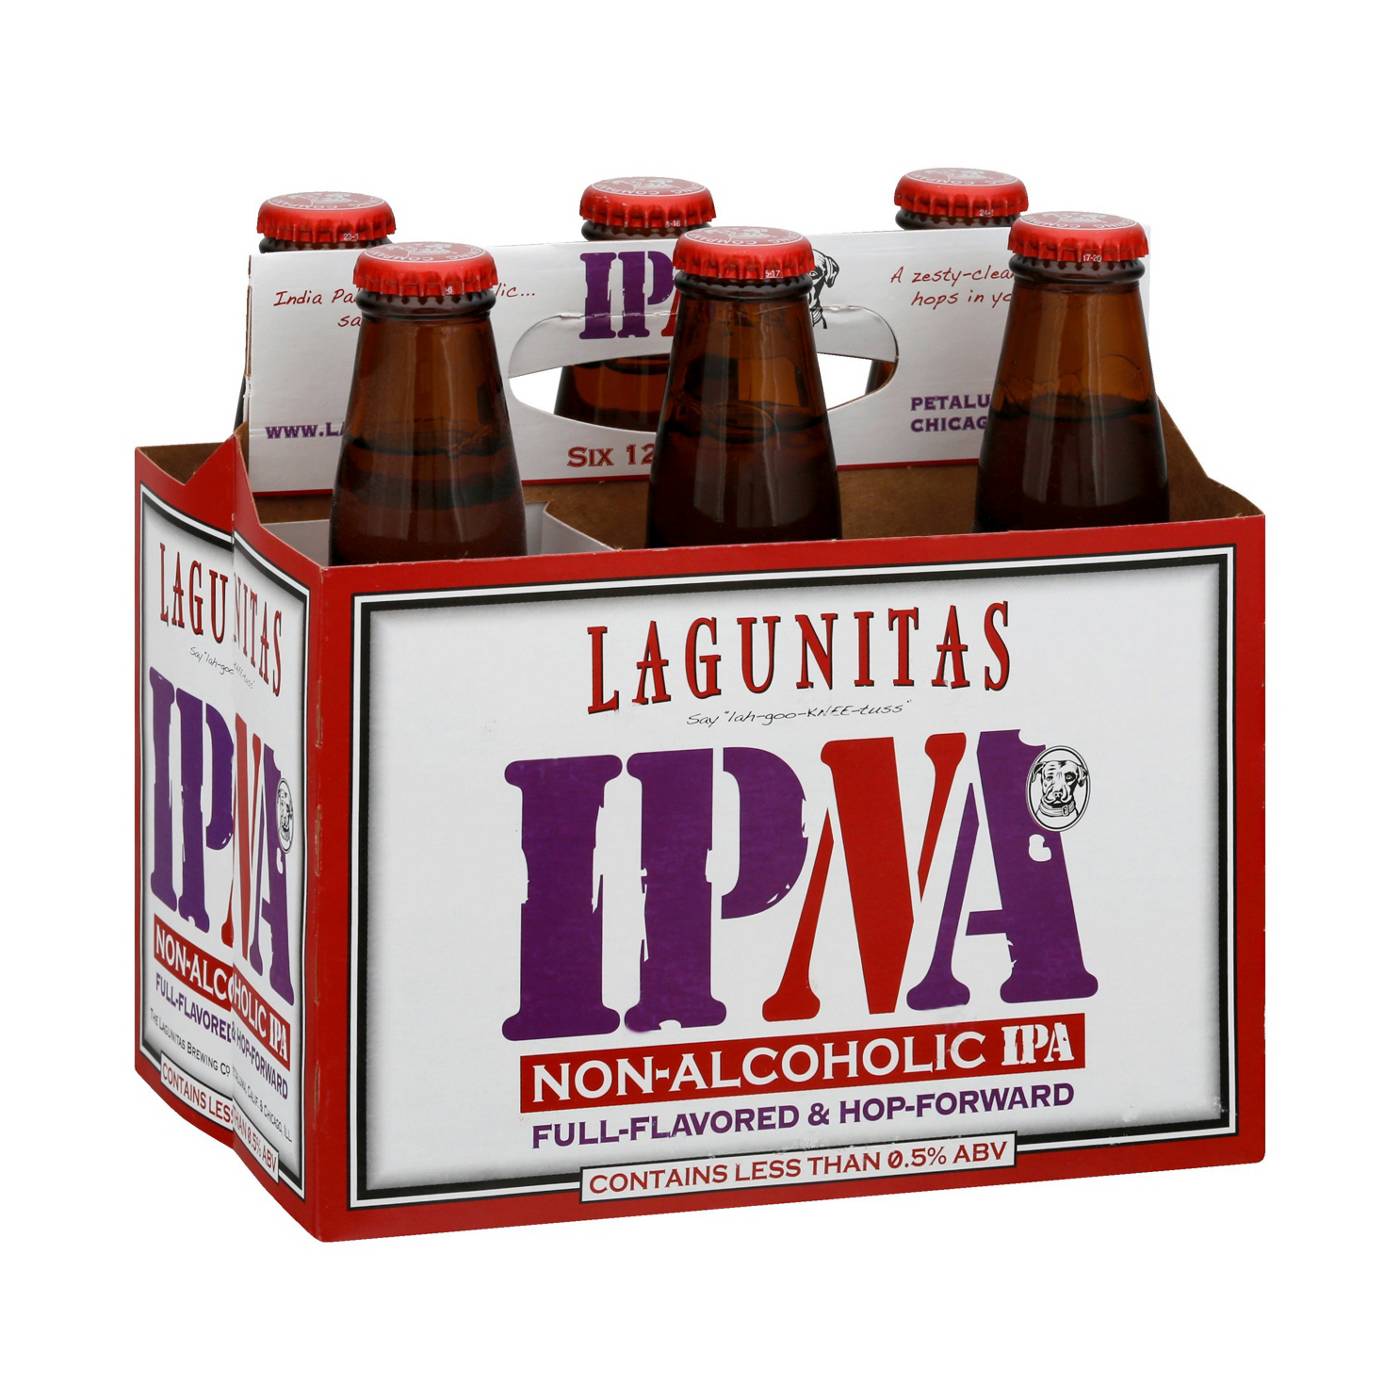 Lagunitas IPNA Non-alcoholic IPA 12 oz Bottles; image 1 of 2